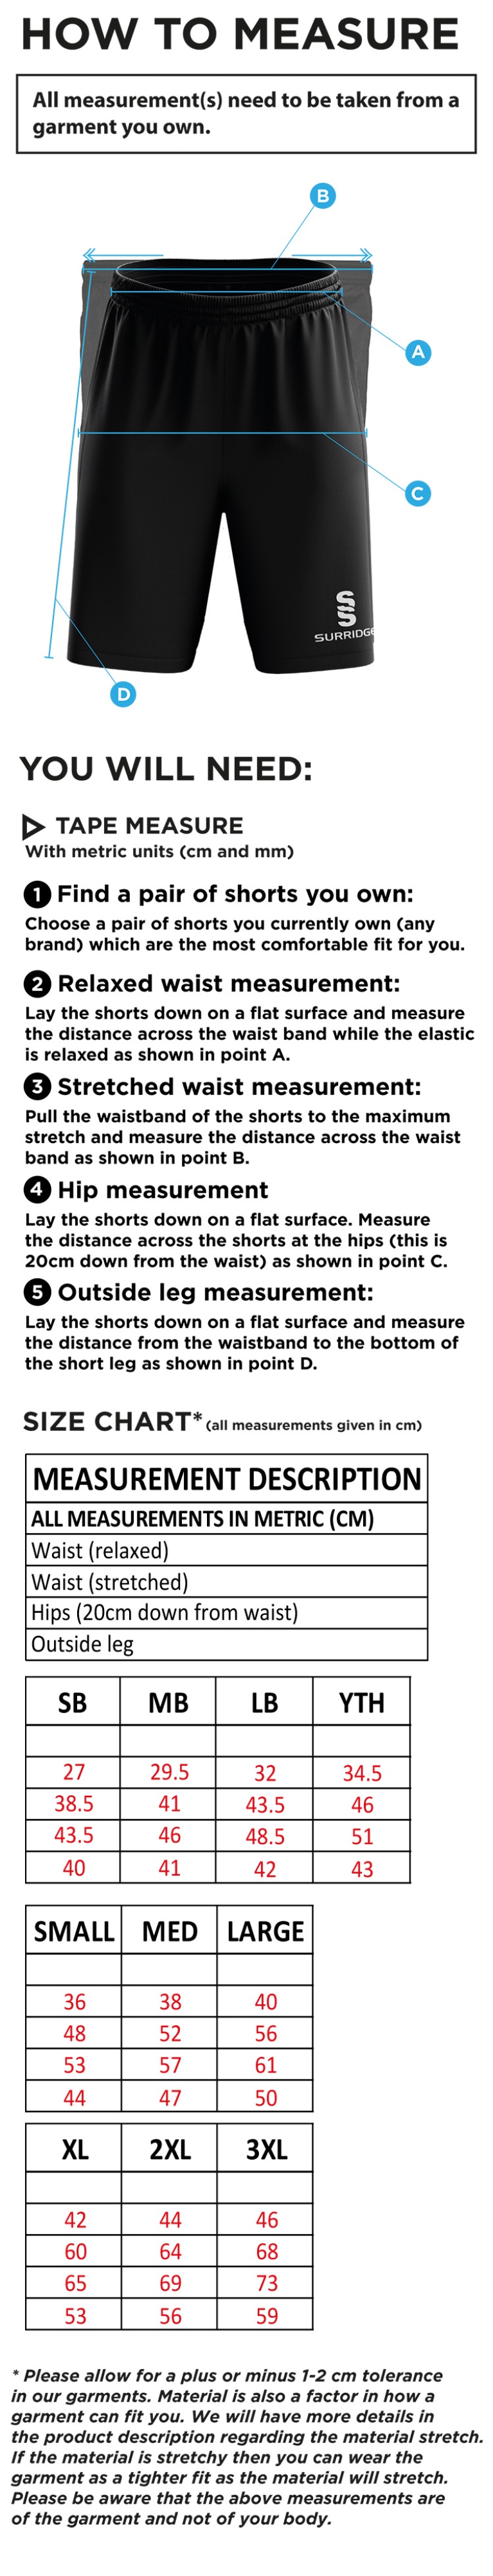 EAST ARDSLEY UTD CC Ripstop Training Short - Size Guide